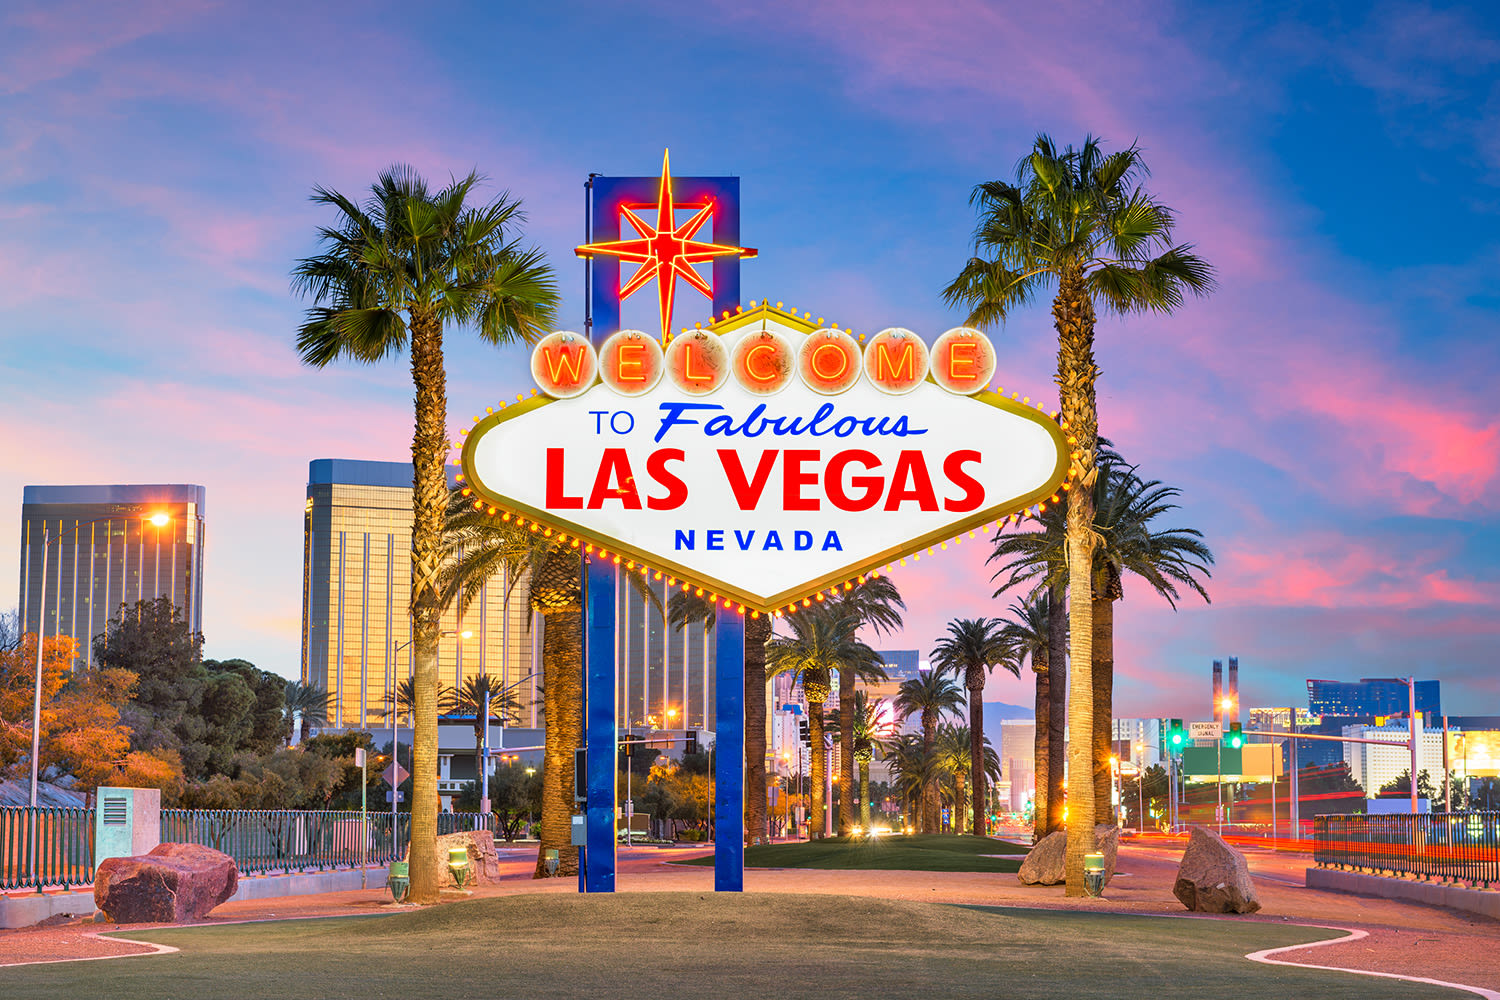 Dream destinations: Four things to do for a perfect Las Vegas trip | Virgin